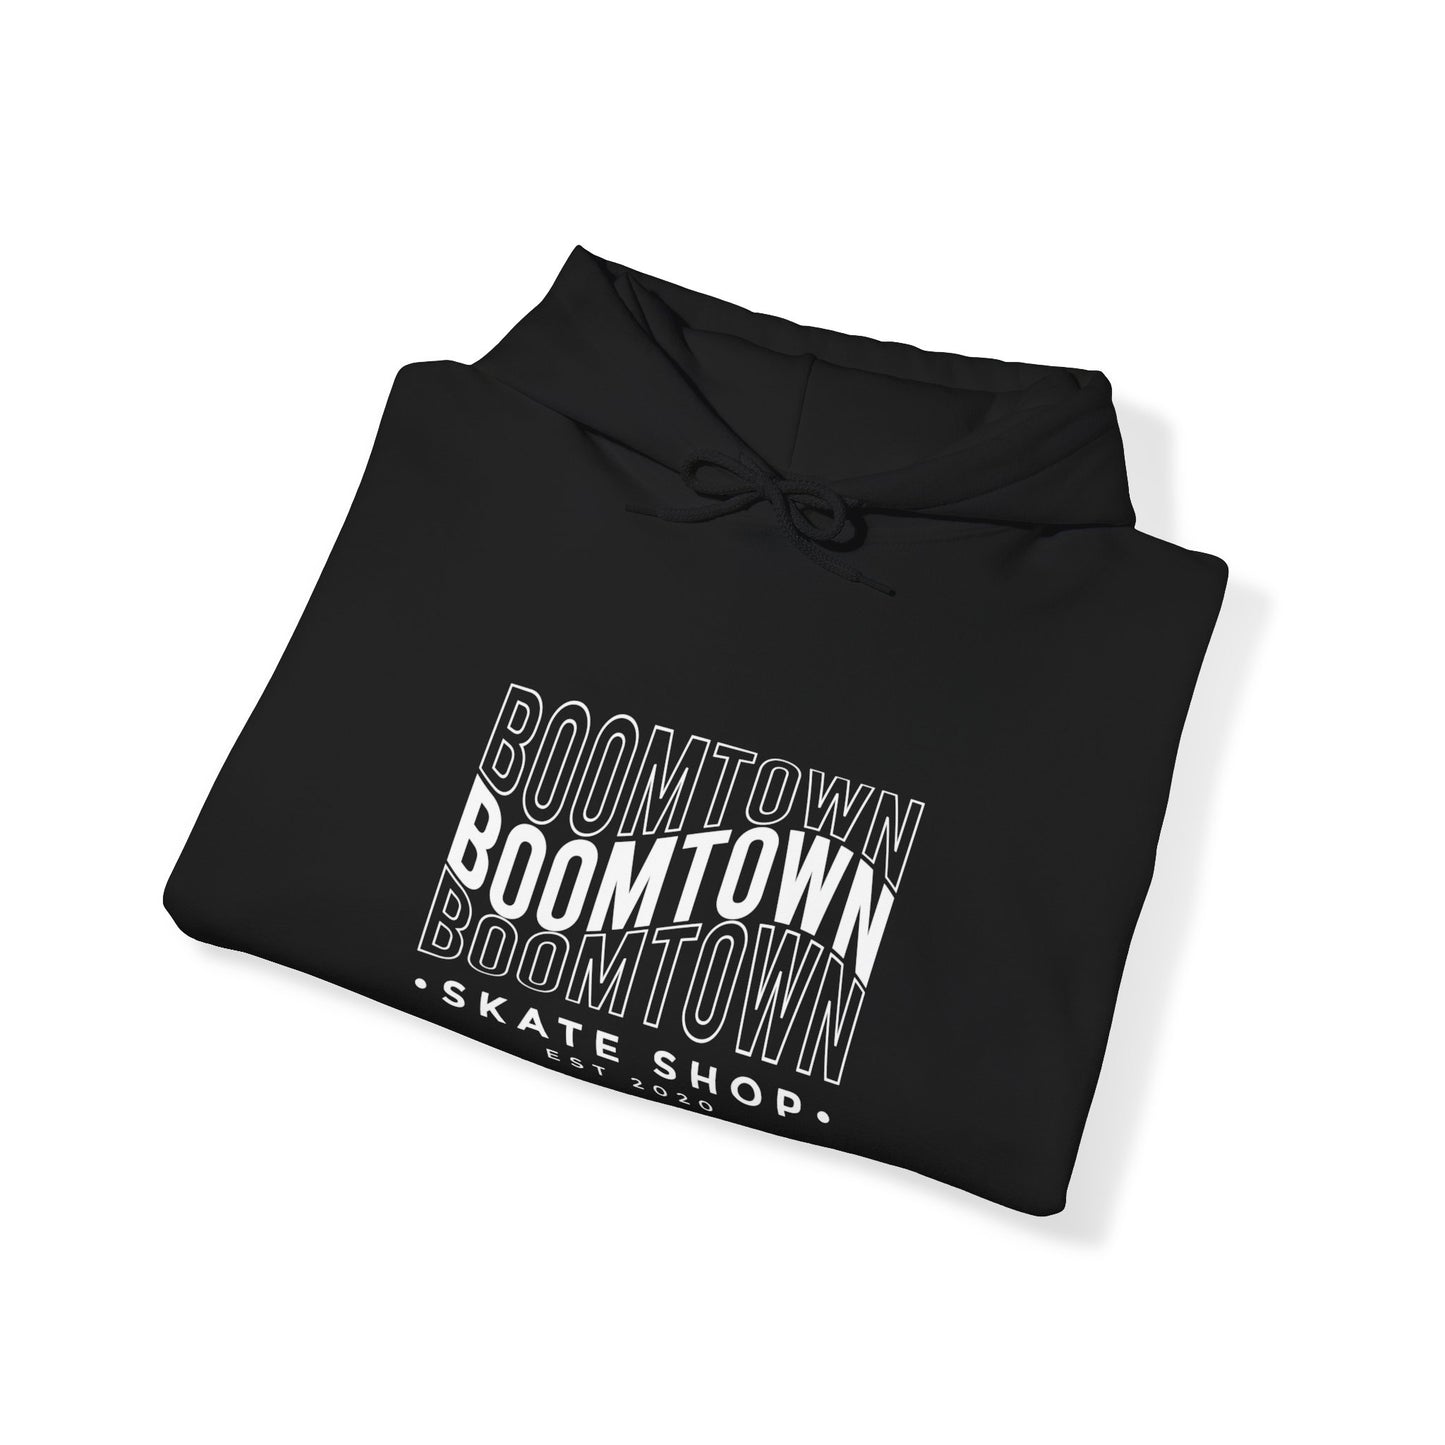 Boomtown Skate Shop Logo Hoodie